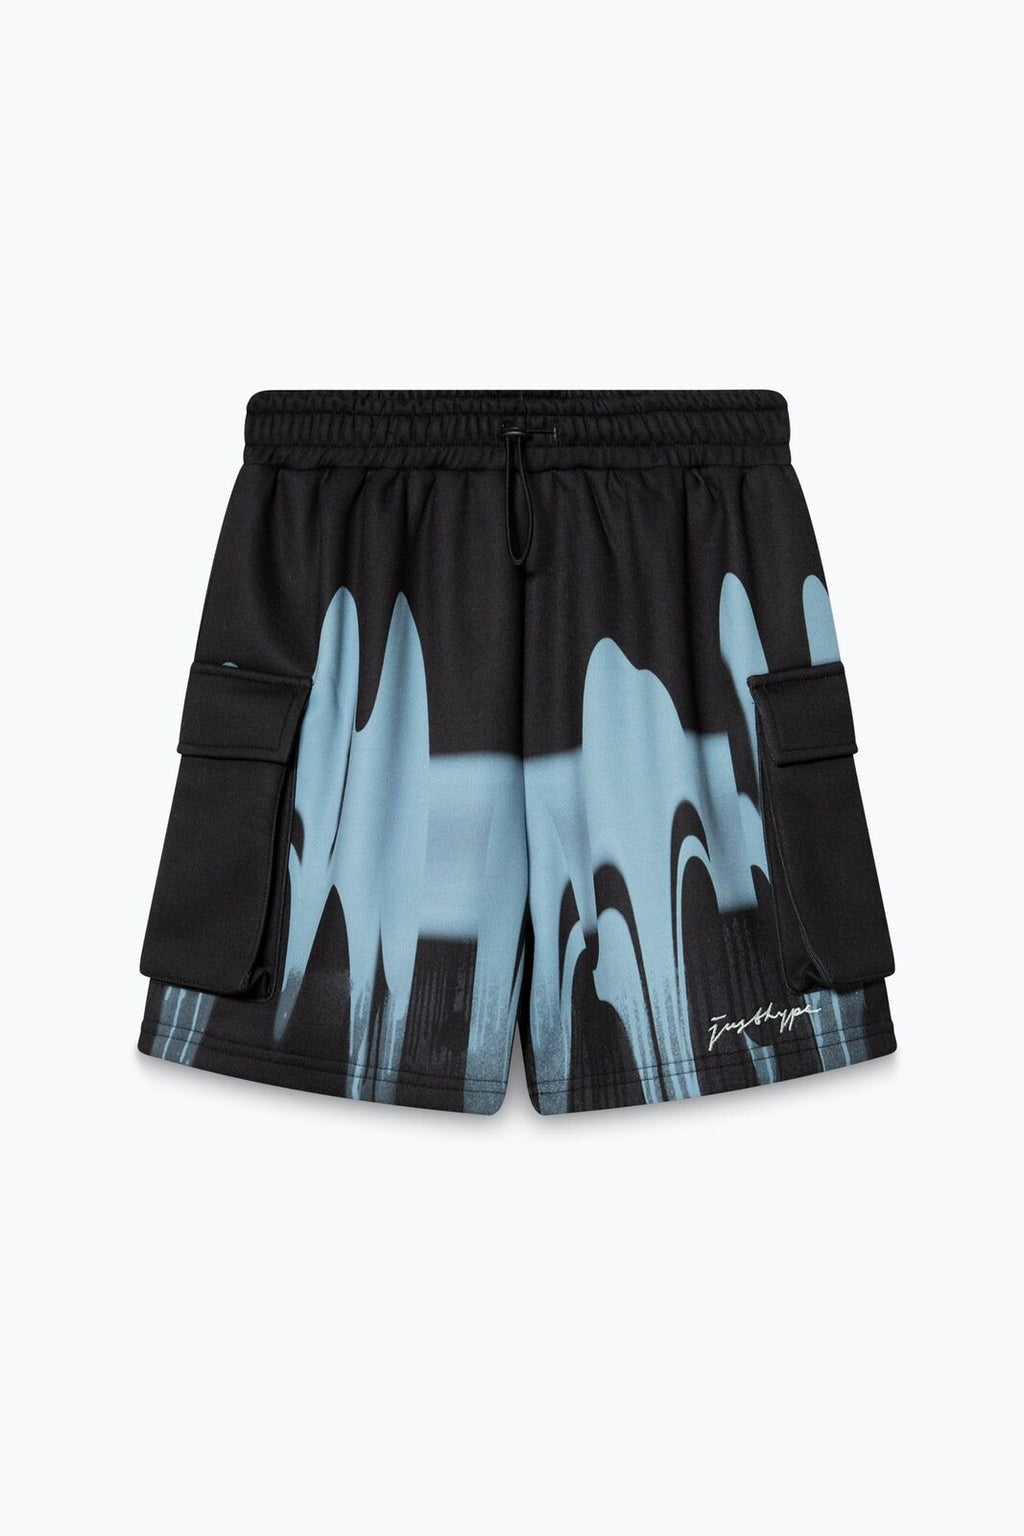 Hype Kids Multi Blue Drips Shorts